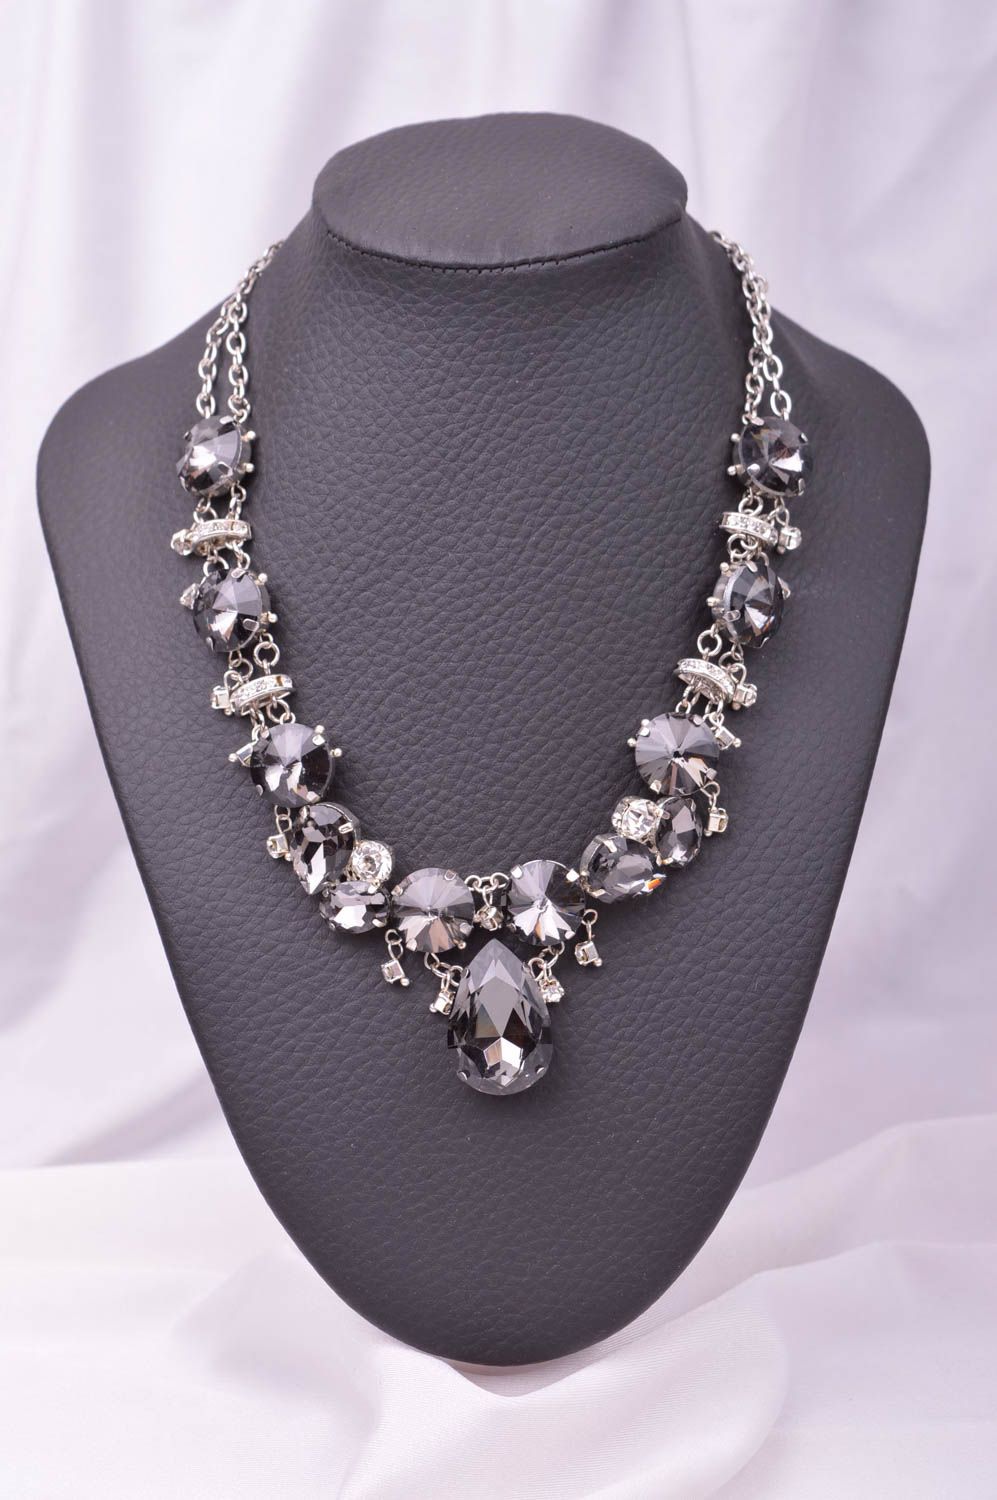 Handmade stylish cute accessory beautiful elegant necklace evening necklace photo 1